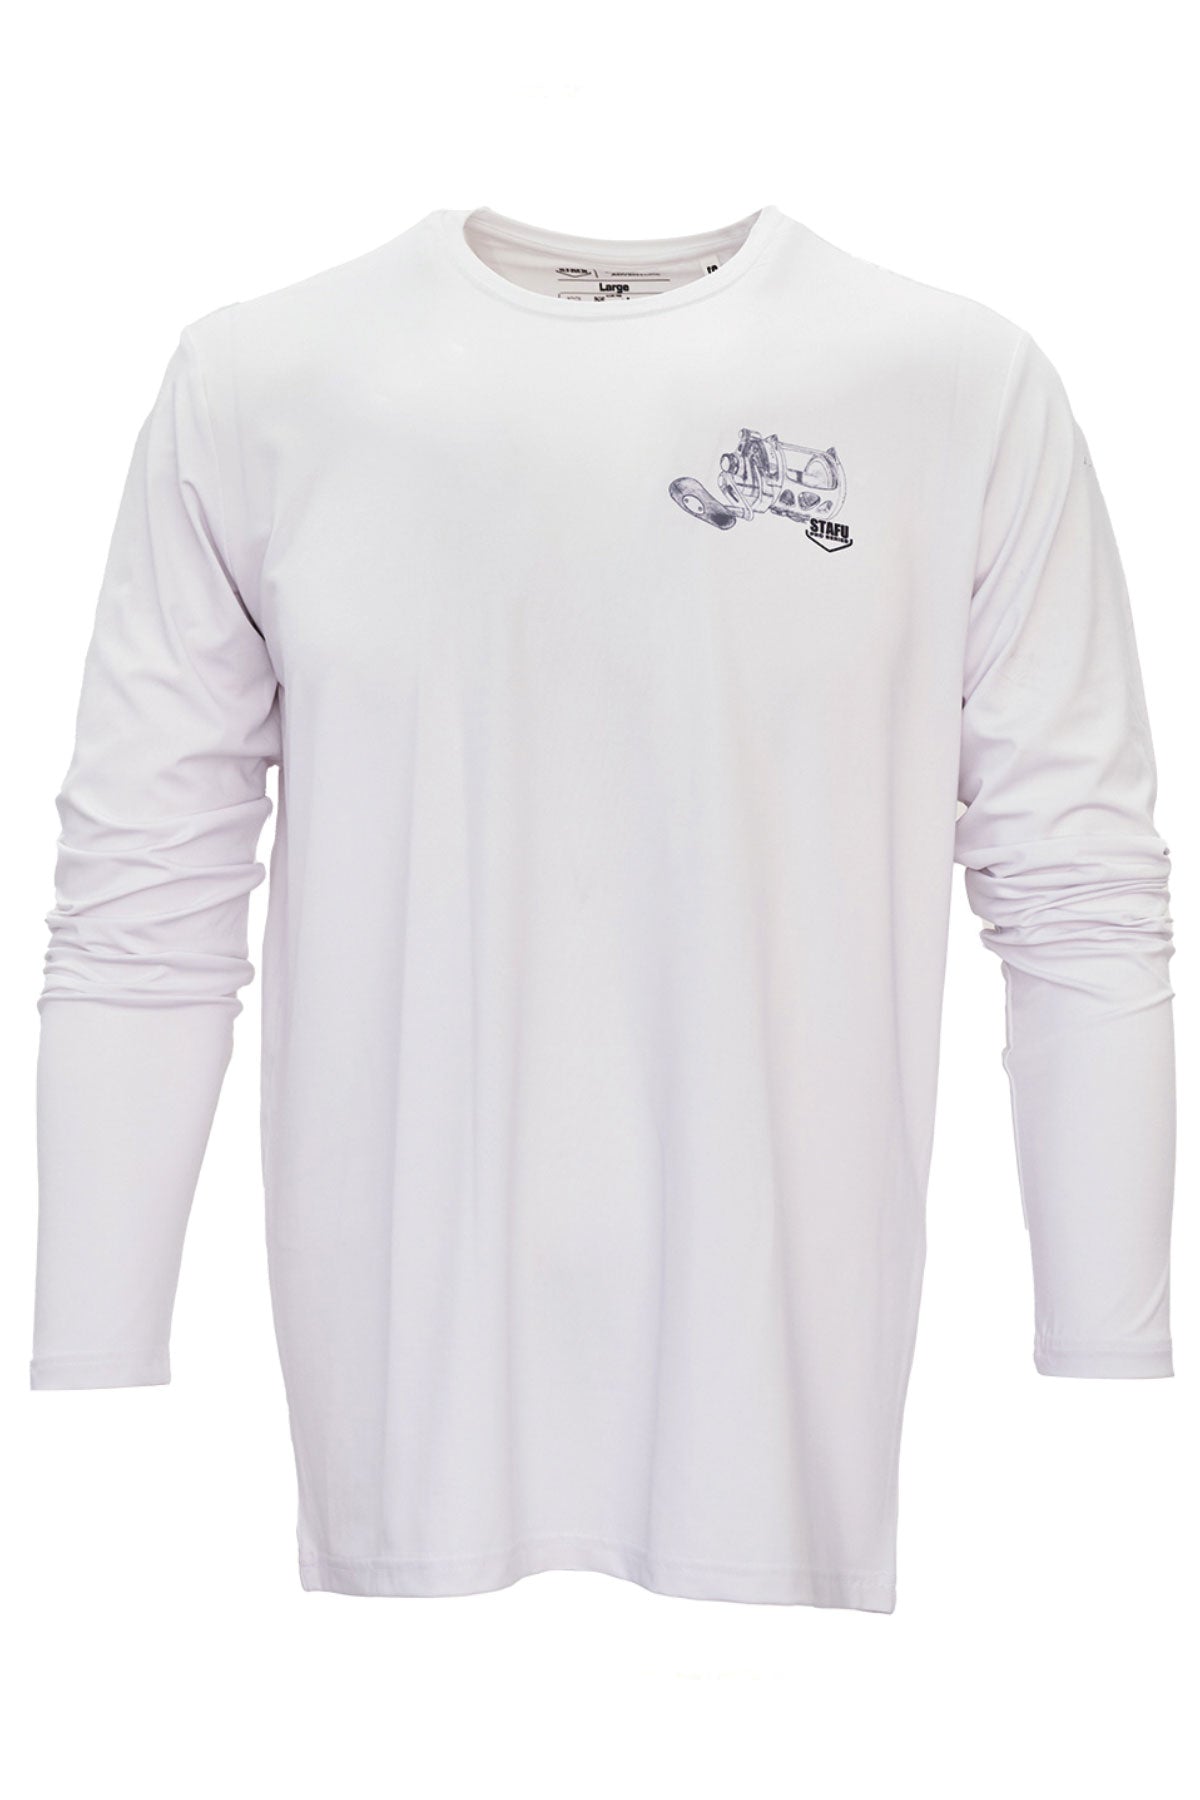 Apex 'Anger Management' Long Sleeve Fishing Shirt - White - Stafu Pro Series